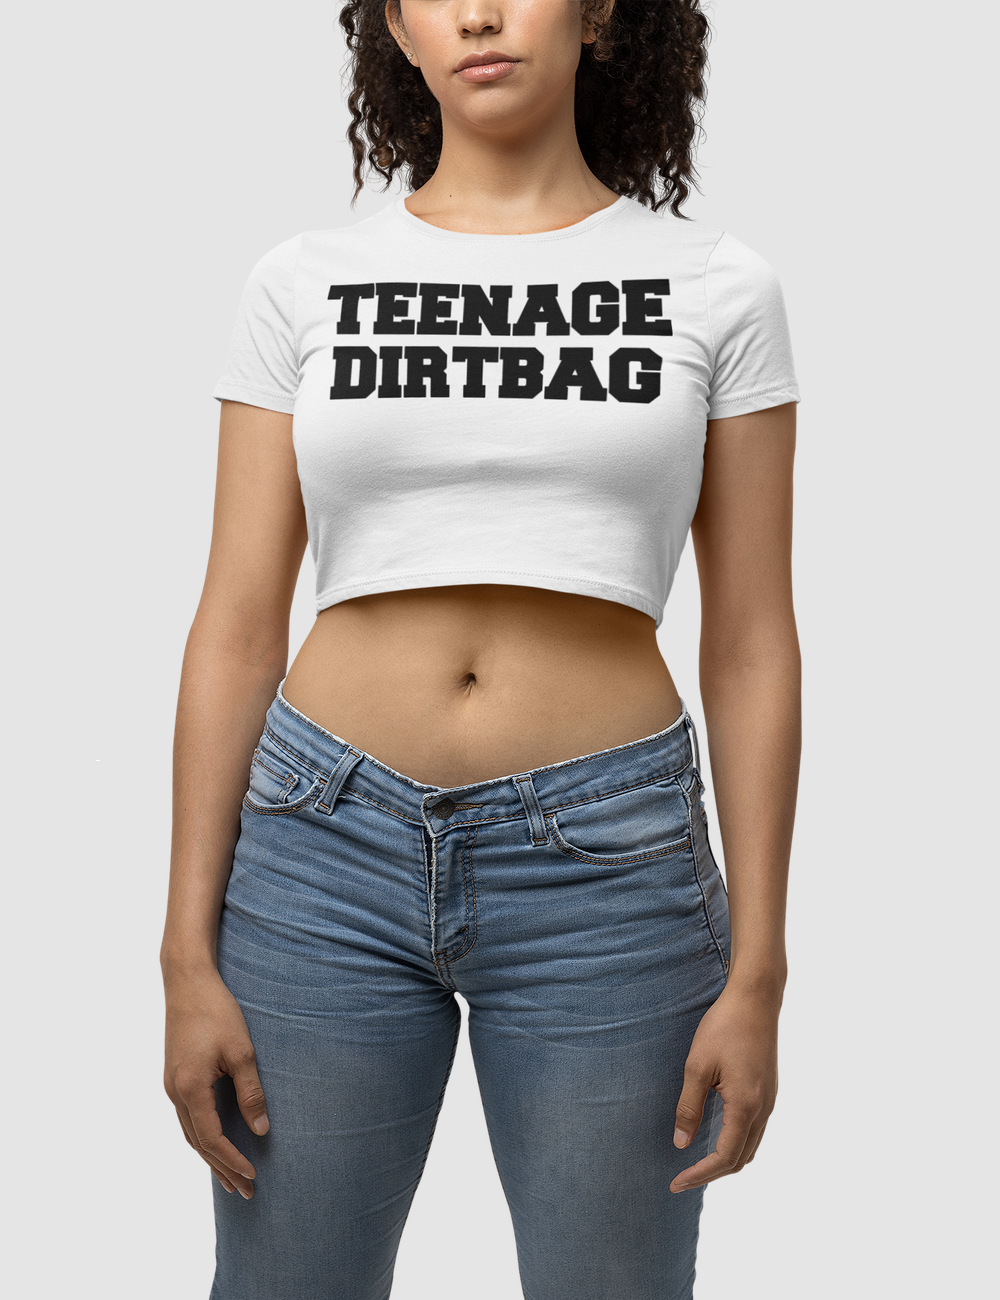 Teenage Dirtbag Women's Fitted Crop Top T-Shirt OniTakai